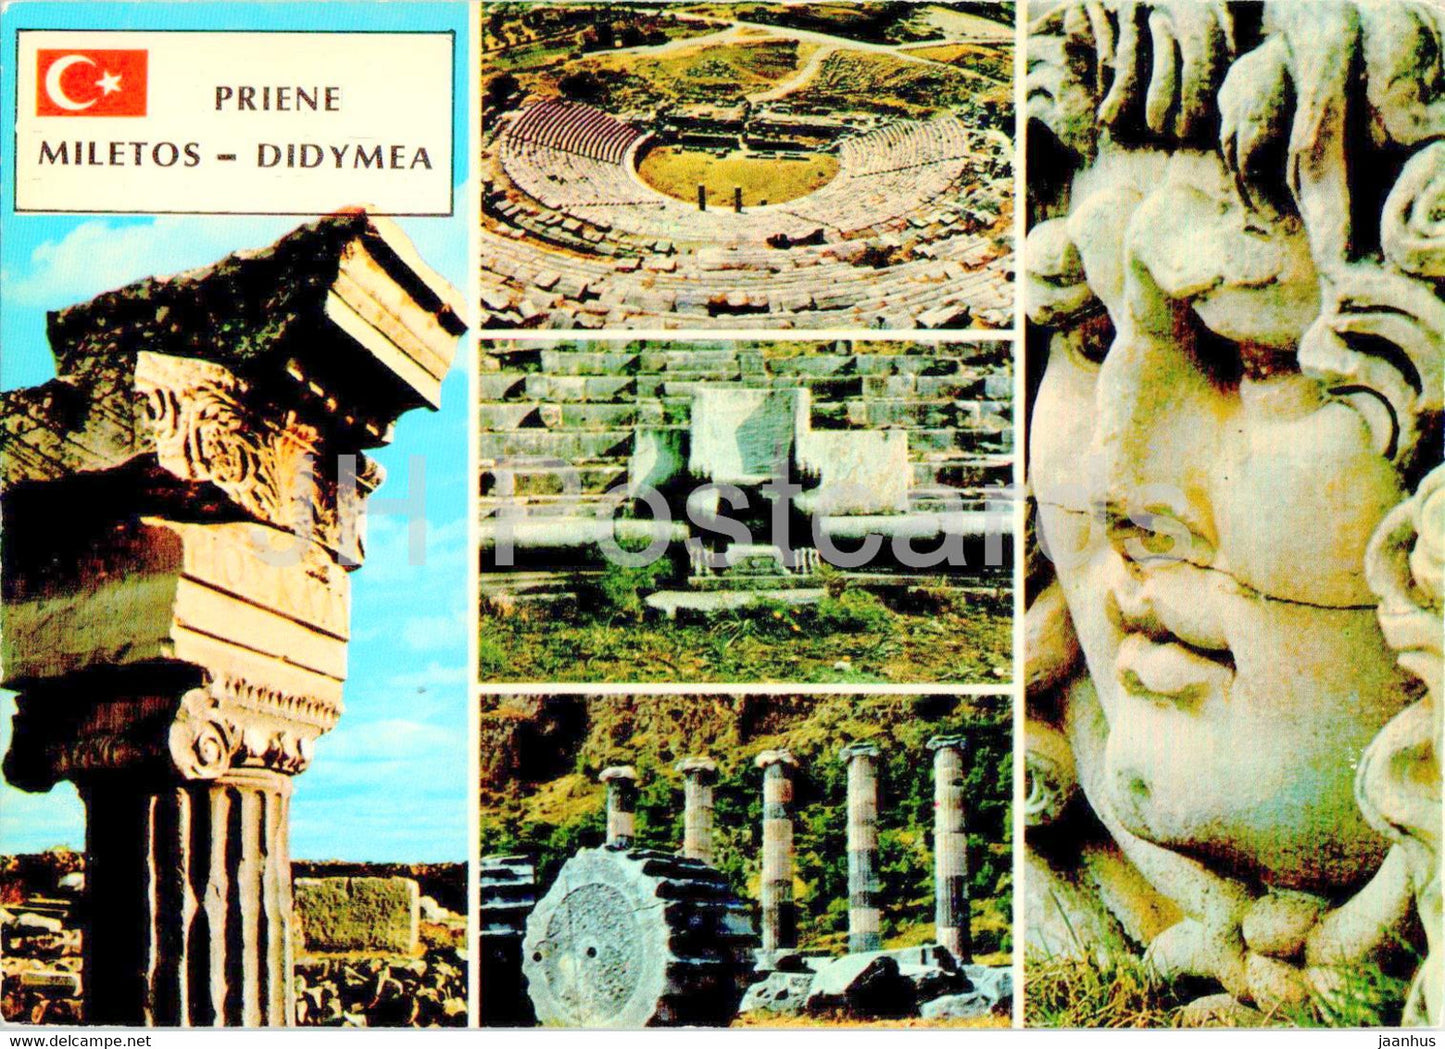 Priene - Miletos - Didymea - Milet - Didim - Didim harabeleri - ancient world - 5453 - Turkey - unused - JH Postcards